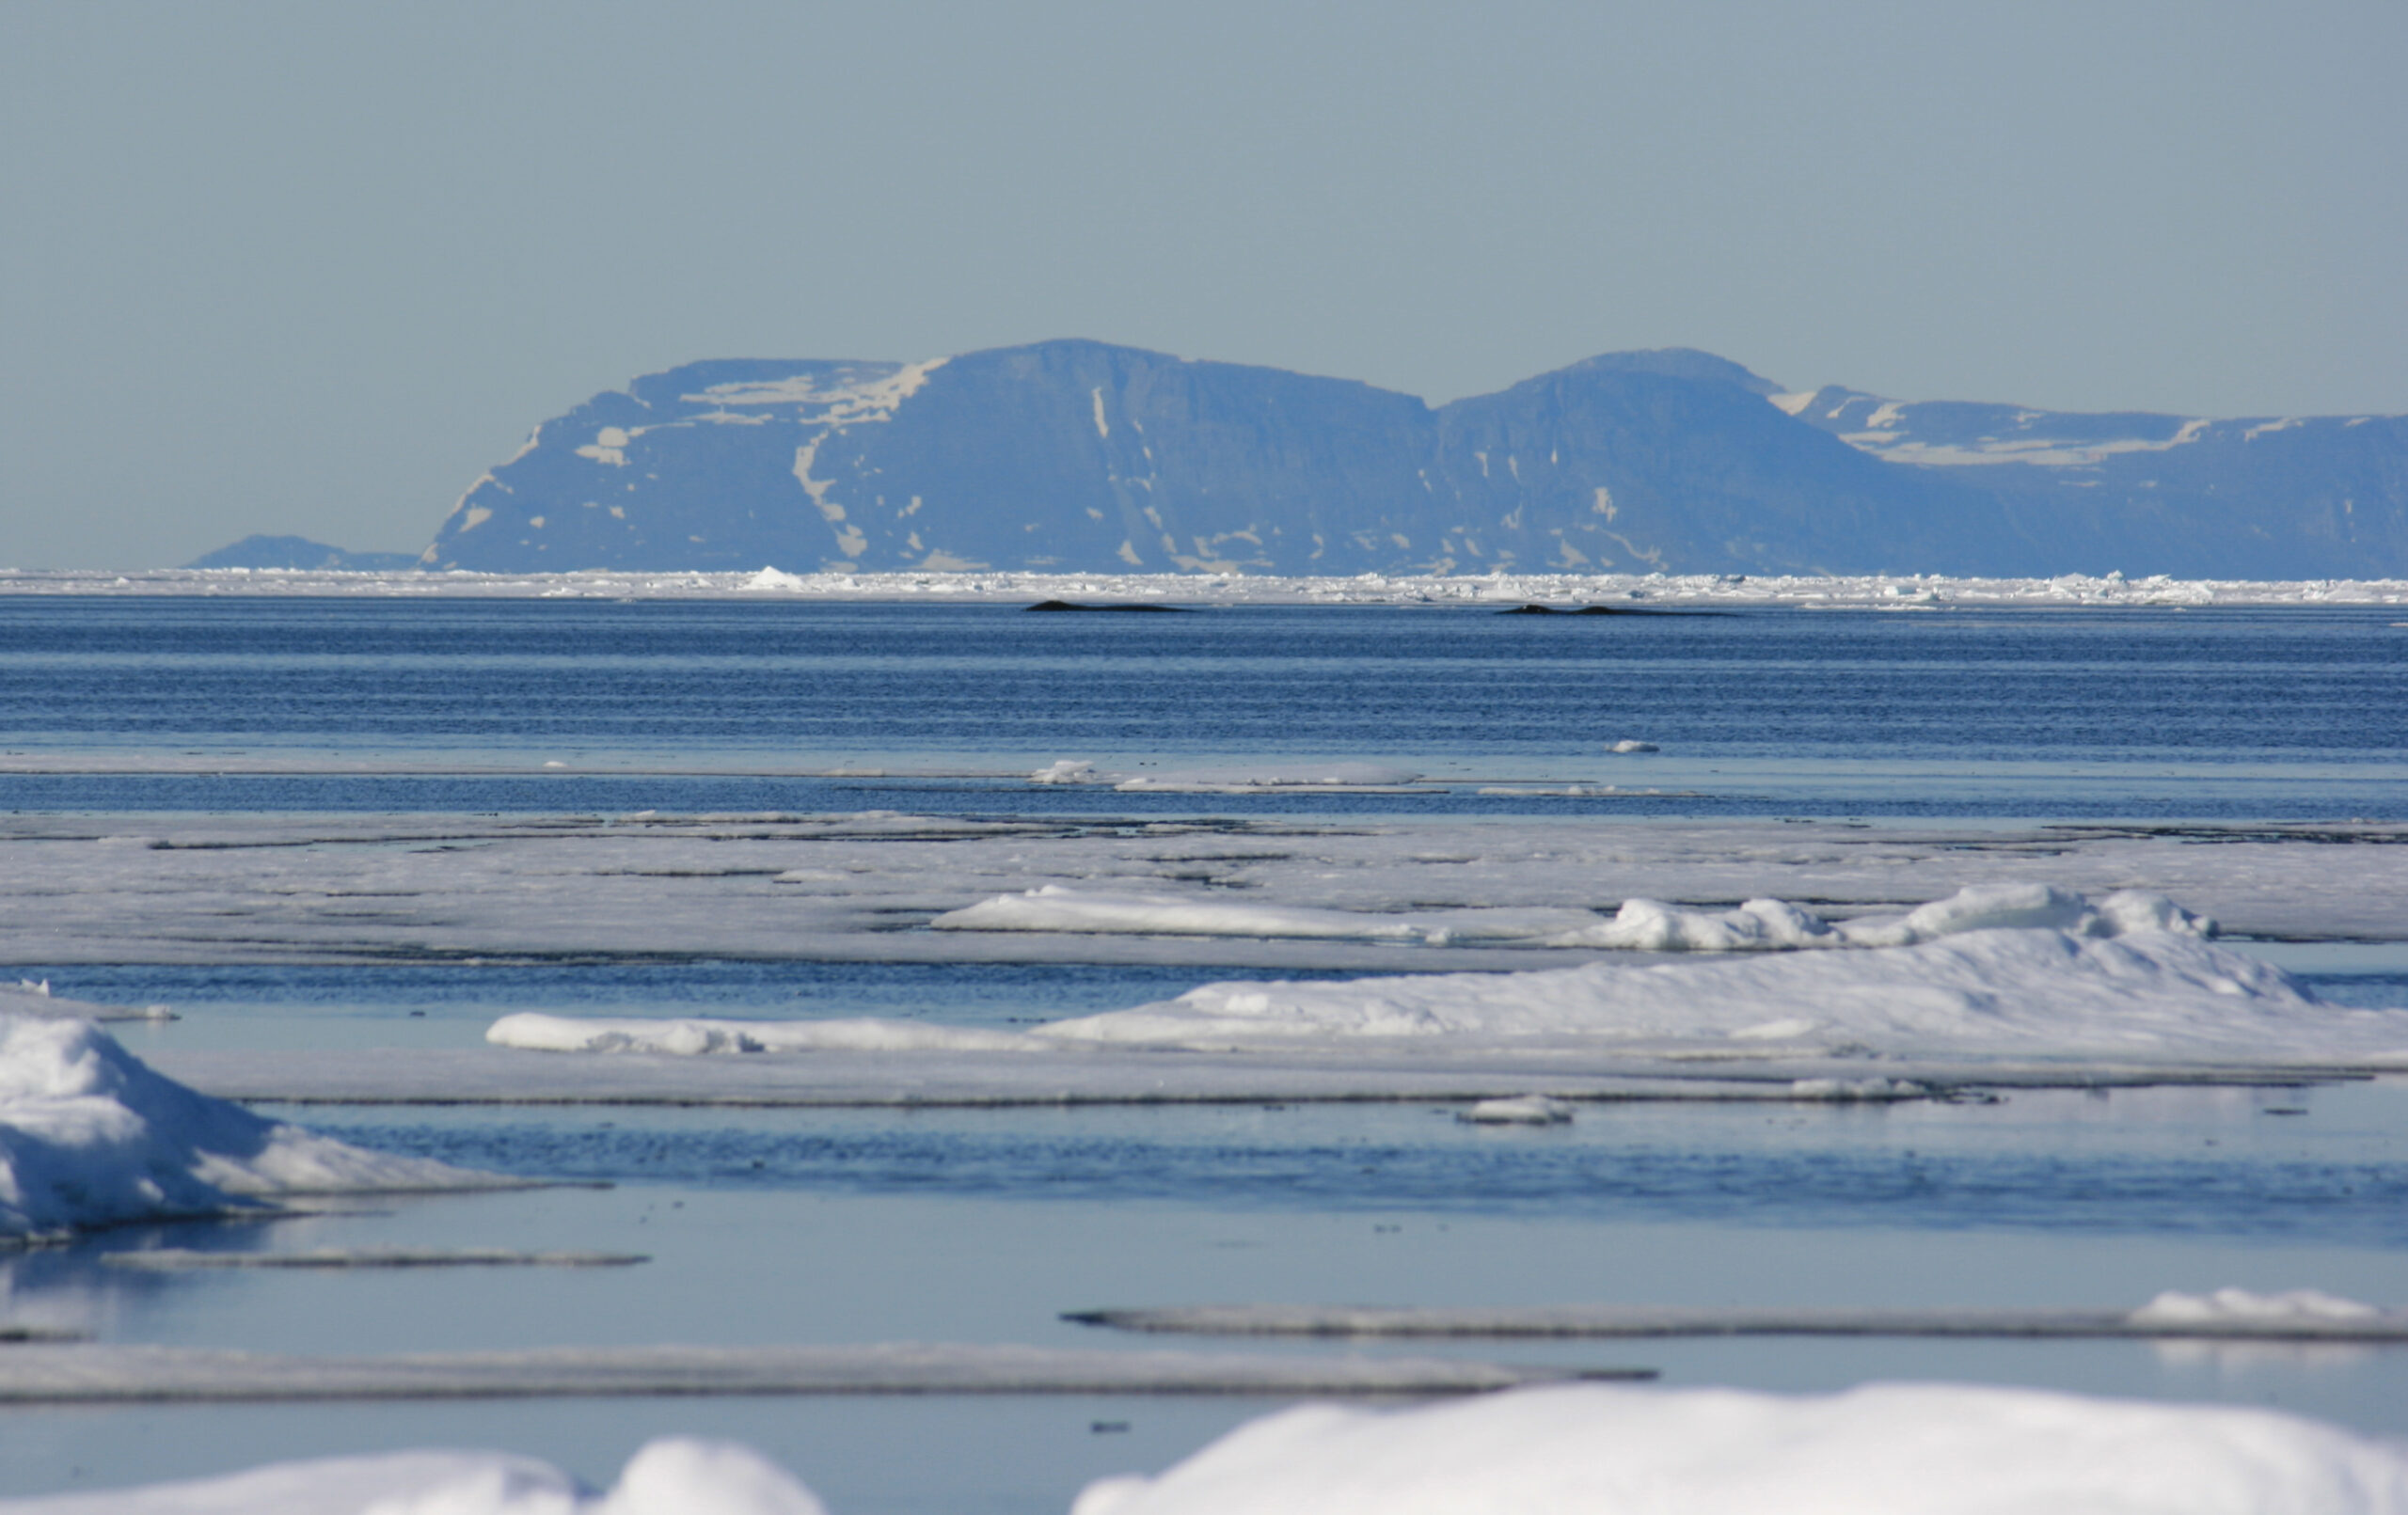 Icy waters and shoreline of Tallurutiup Imanga; Lancaster Sound, Northwest Passage, Nunavut